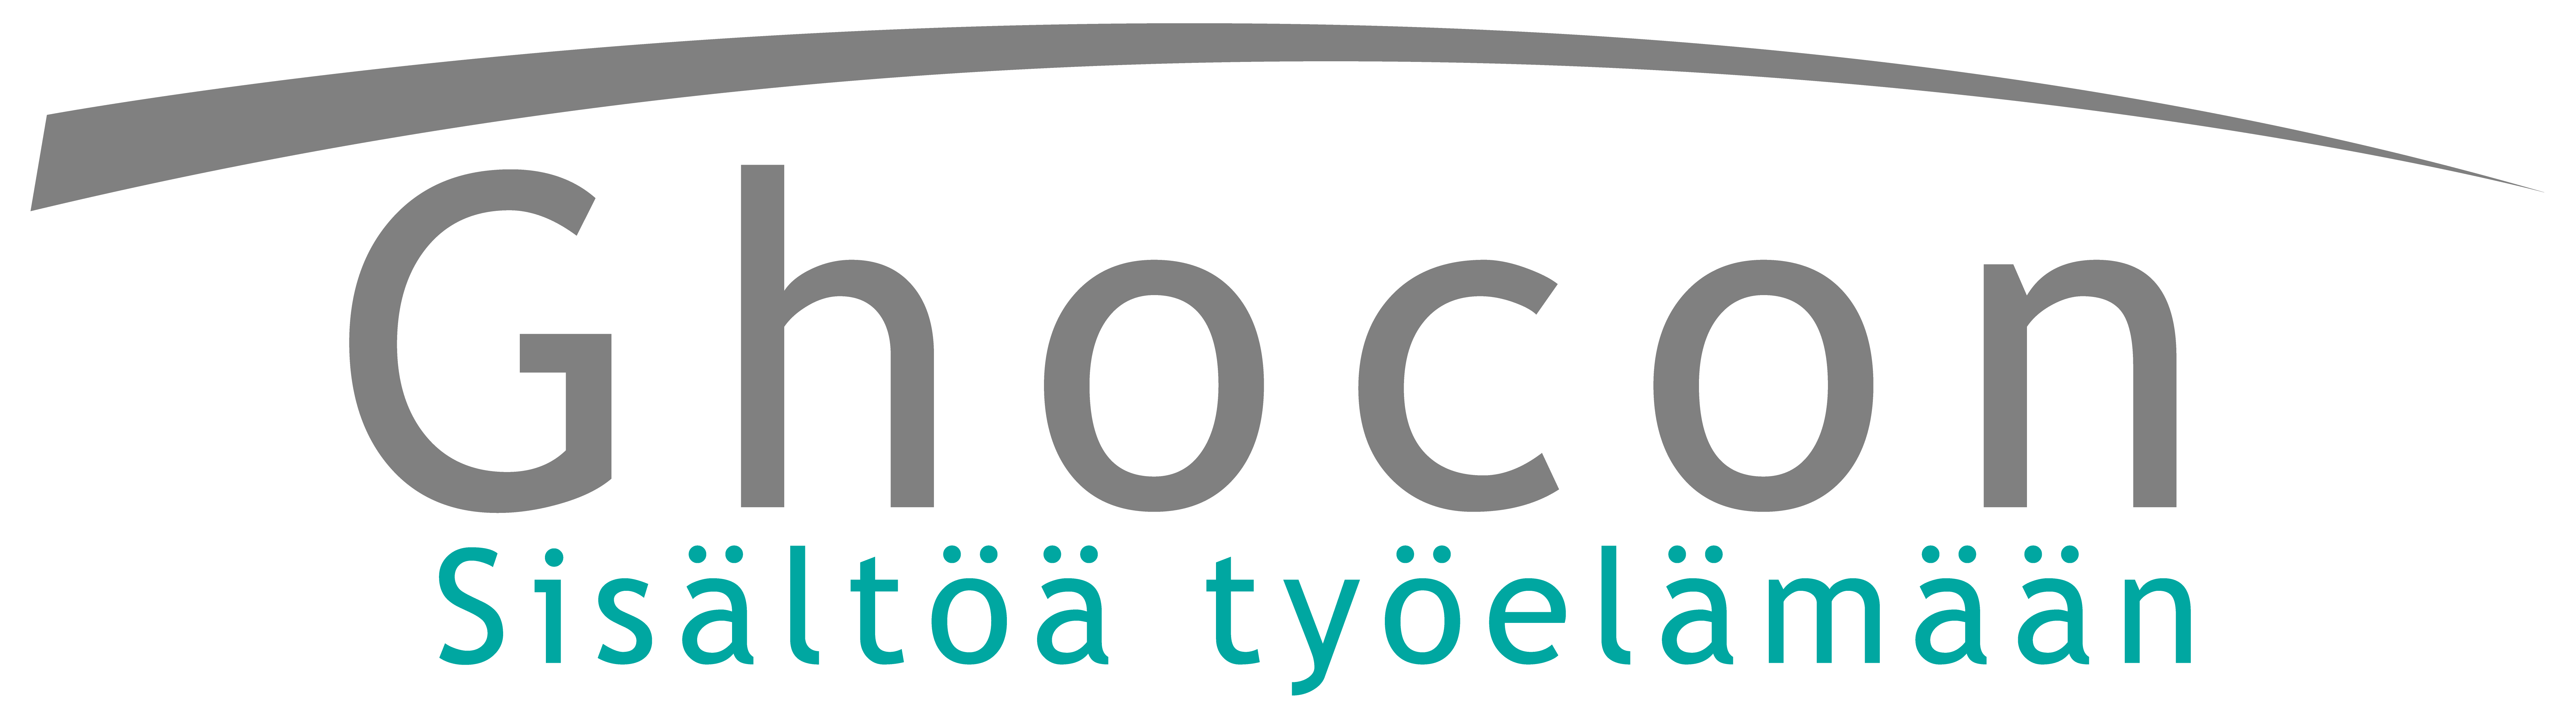 Ghocon logo